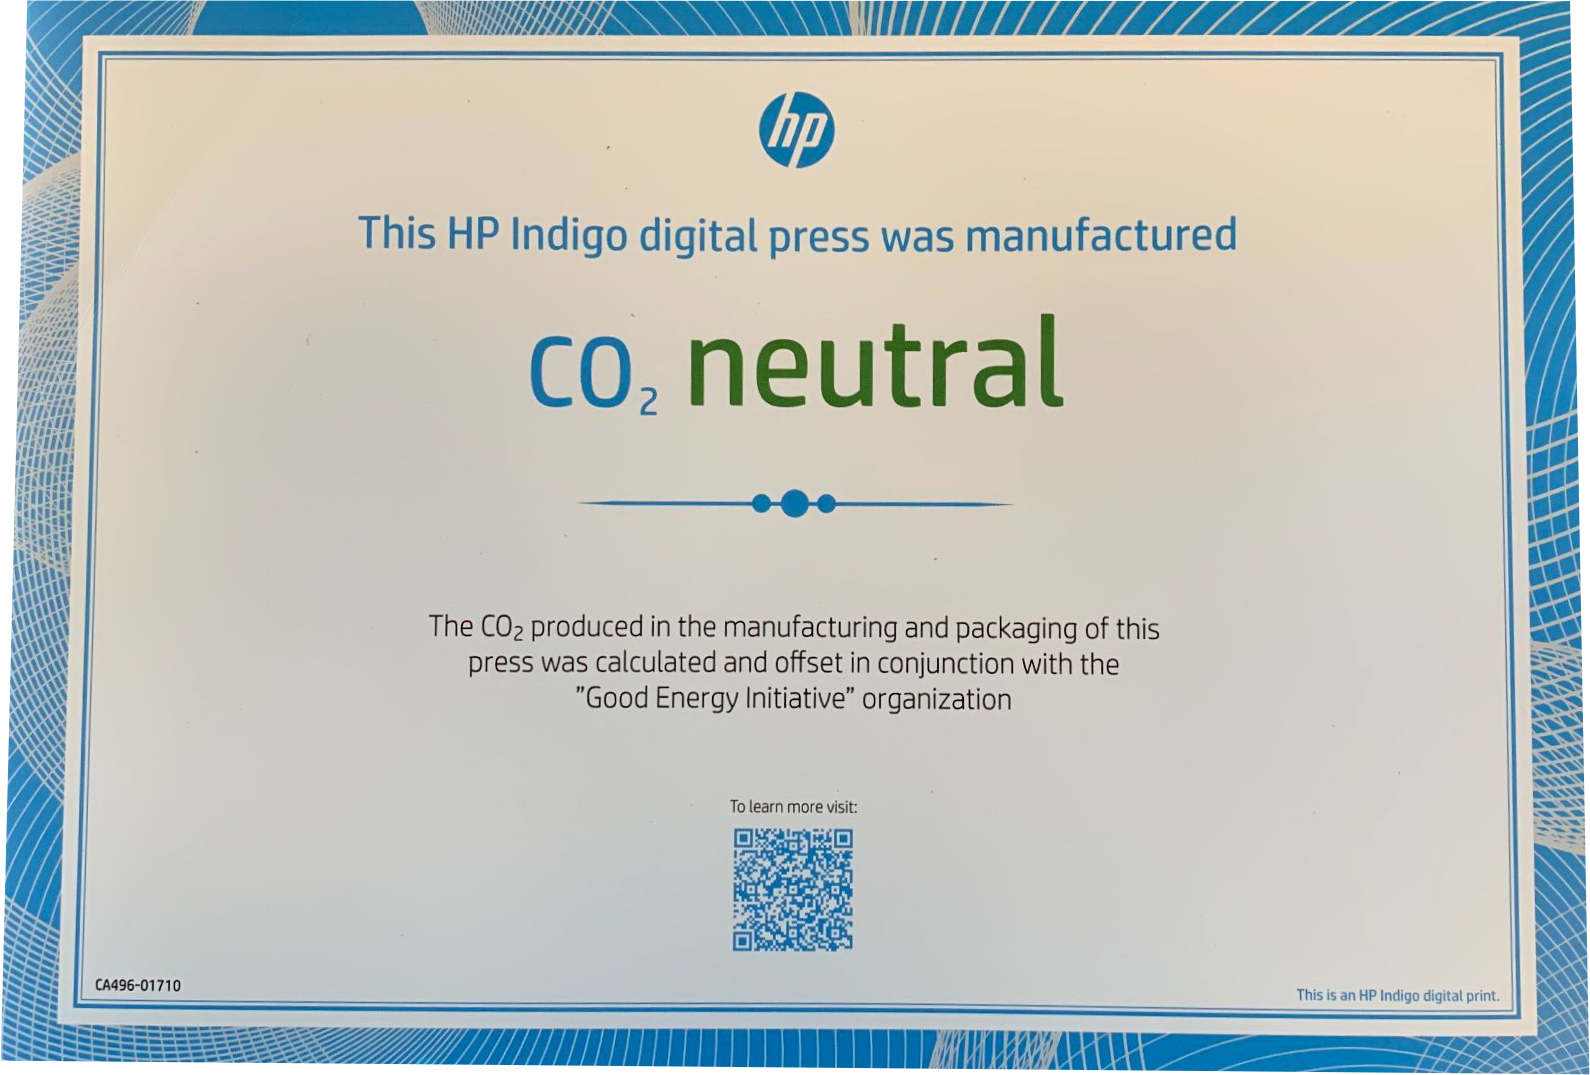 HP Indigo certifacte showing the printer is CO2 neutral